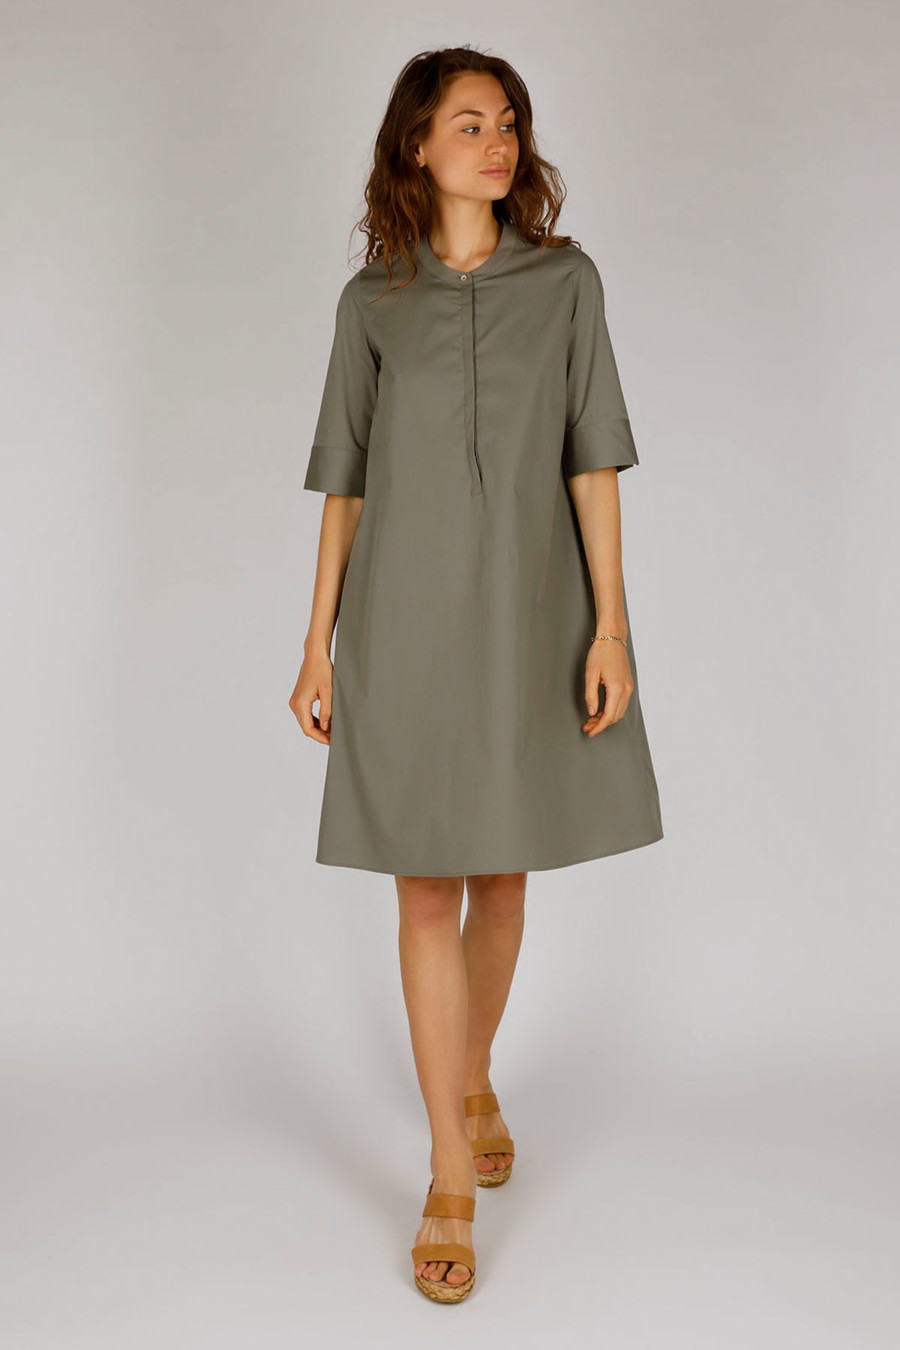 PHOEBE – Hemdblusenkleid mit verlängertem Halbarm – Farbe: Vetiver